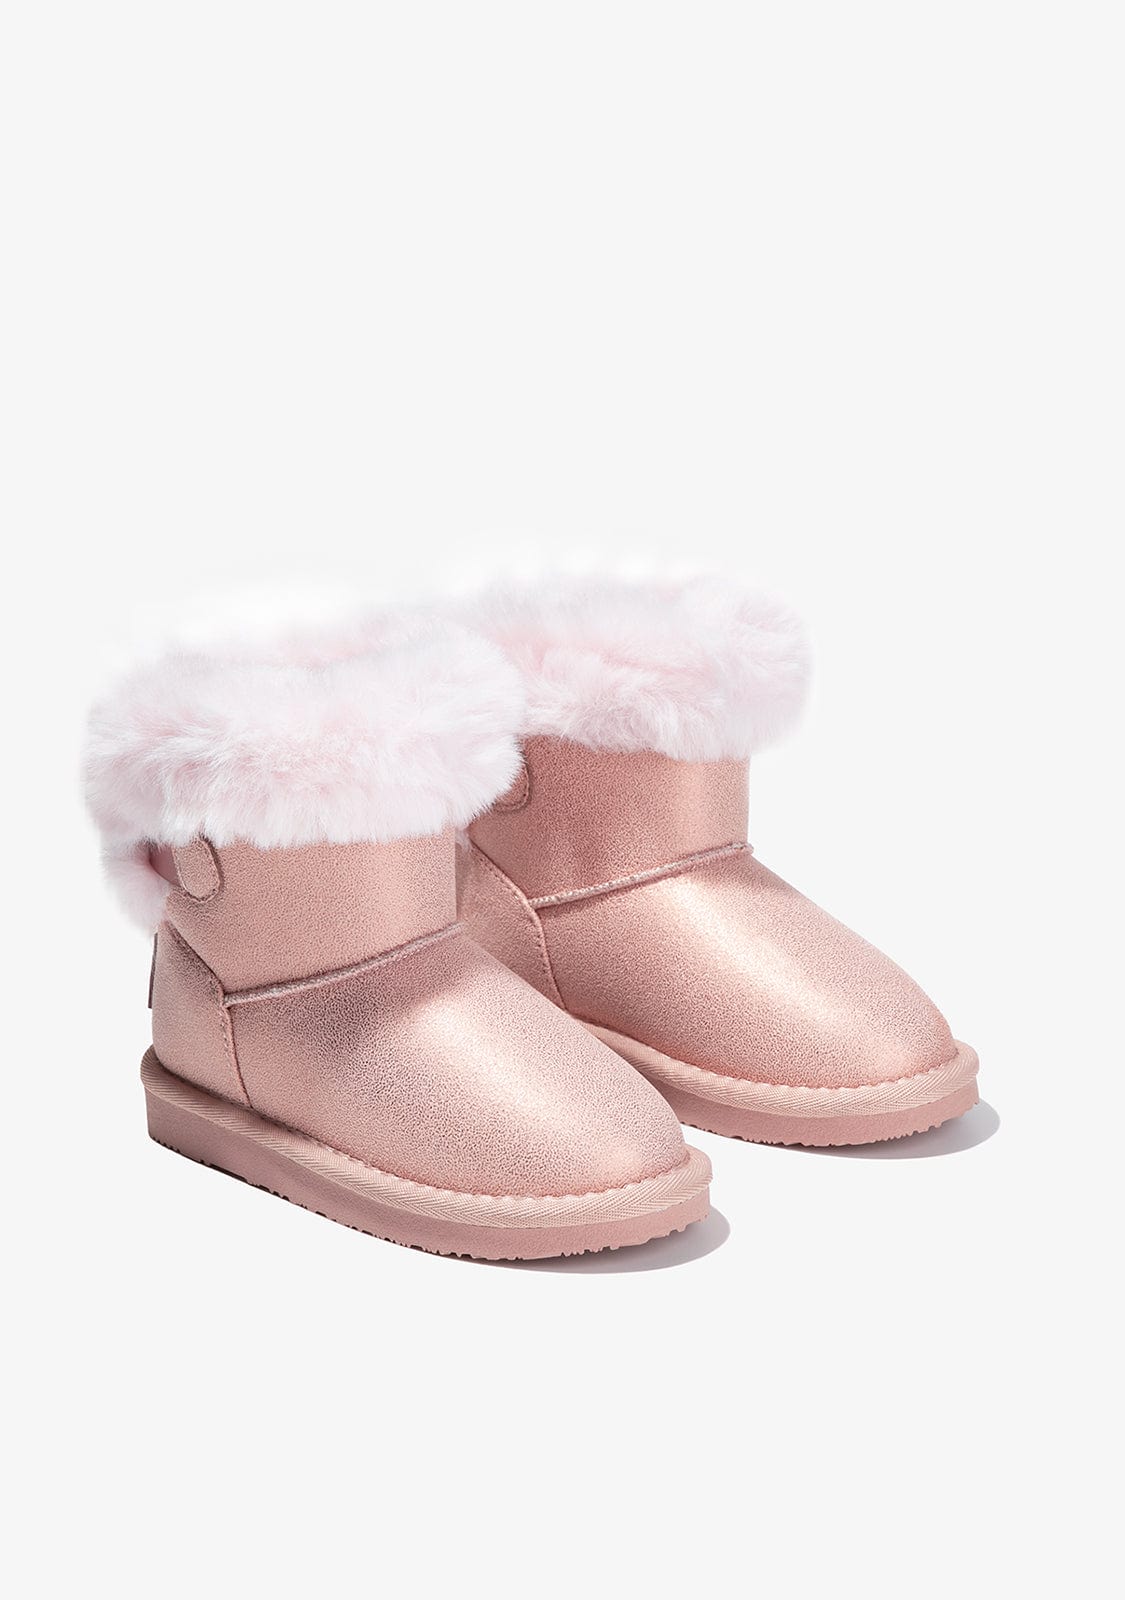 B&W JUNIOR Shoes Girl's Pink Strass Australian Boots B&W